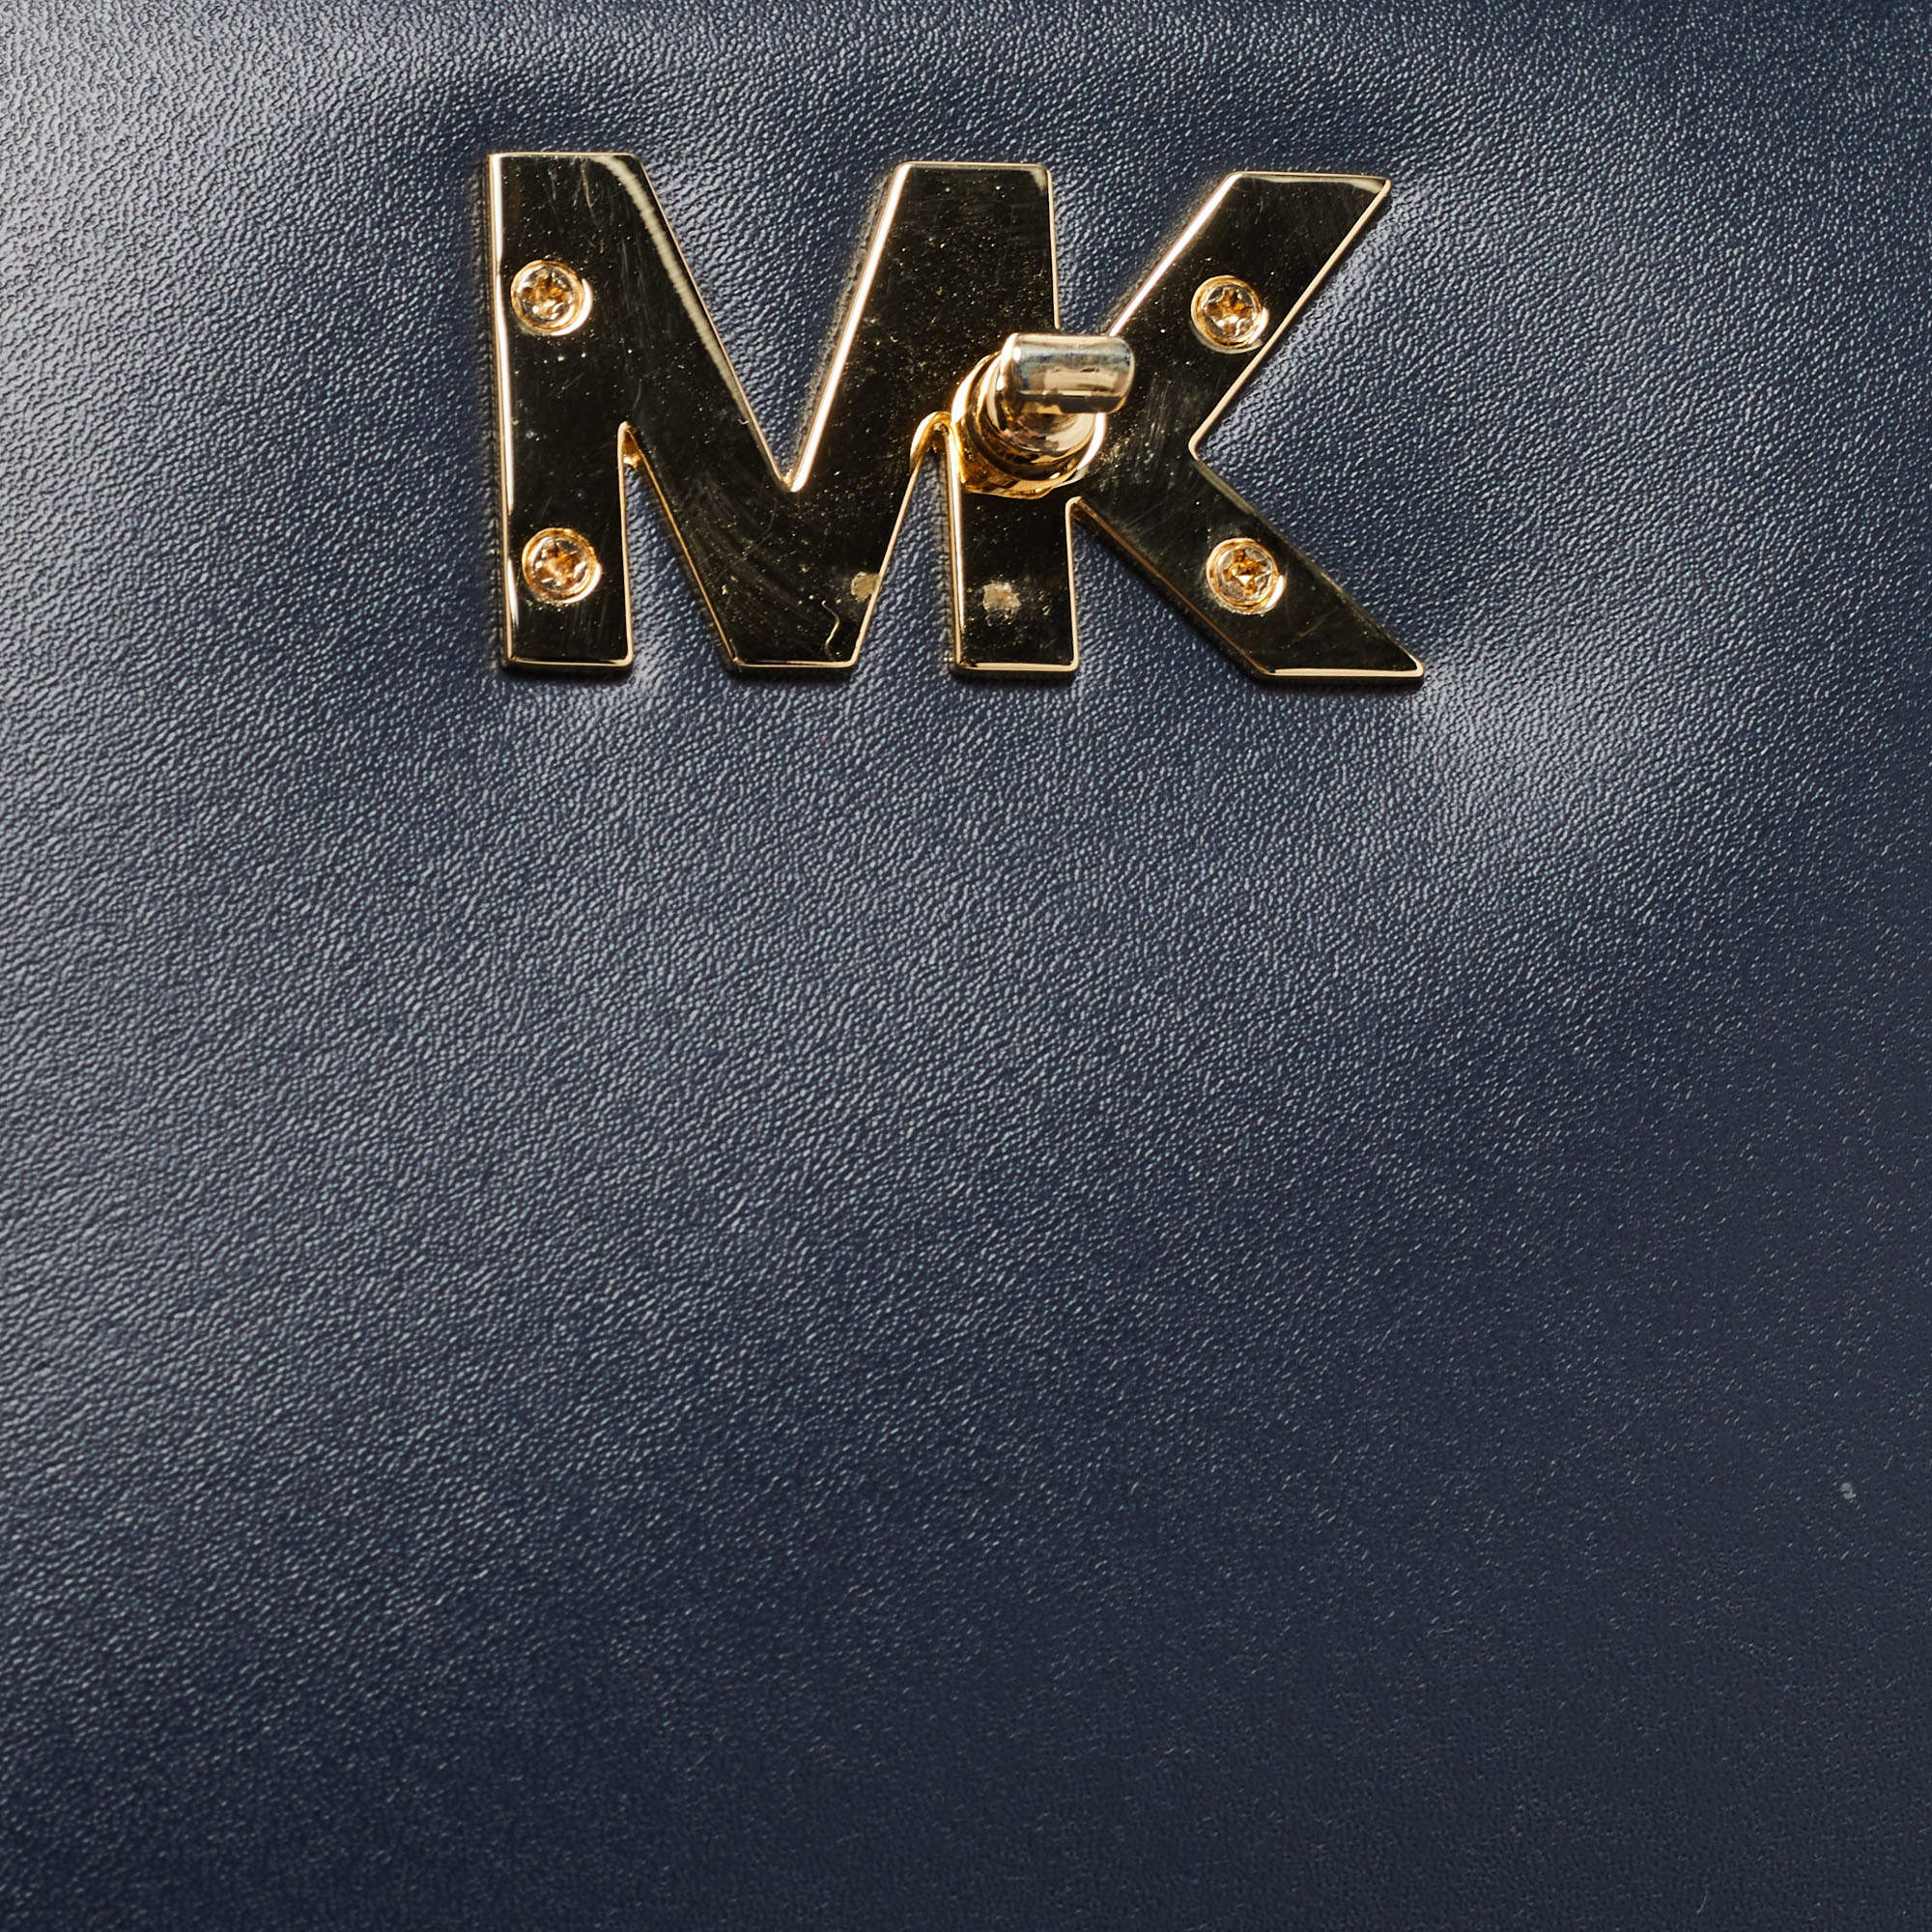 Michael Kors Mott Chain Swag Shoulder Bag – Luxe Teal/Admiral